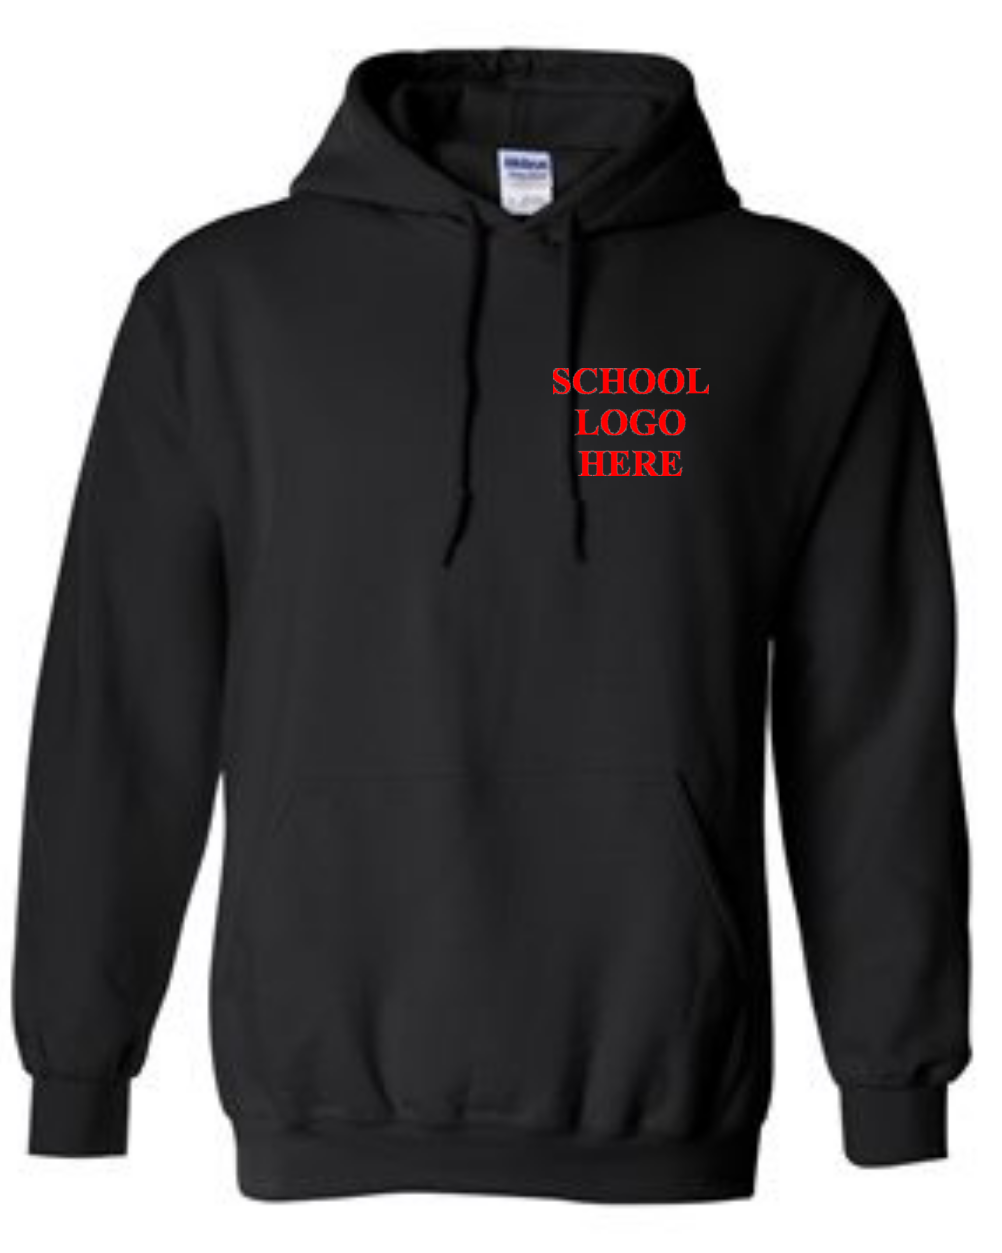 Sparks Middle School Uniform Black Sweatshirt